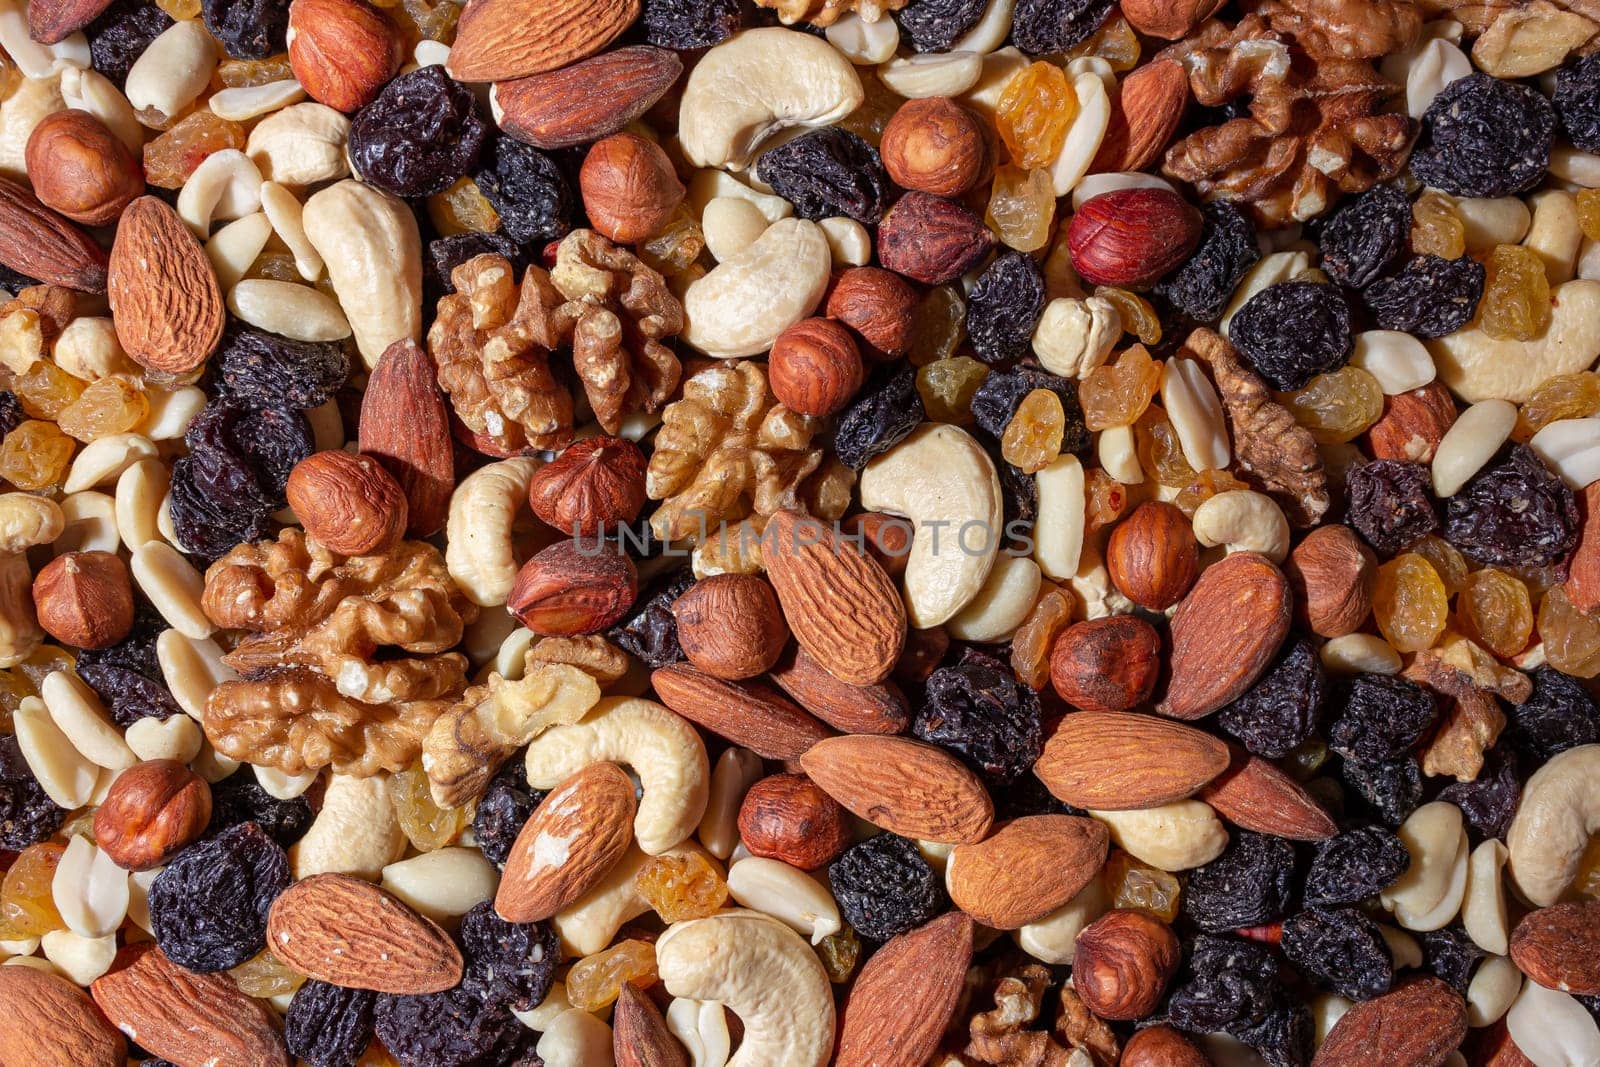 Mixed Nuts: Almonds, Walnuts, Cashews, Peanuts, Hazelnuts, Dried Prunes and Raisins by InfinitumProdux